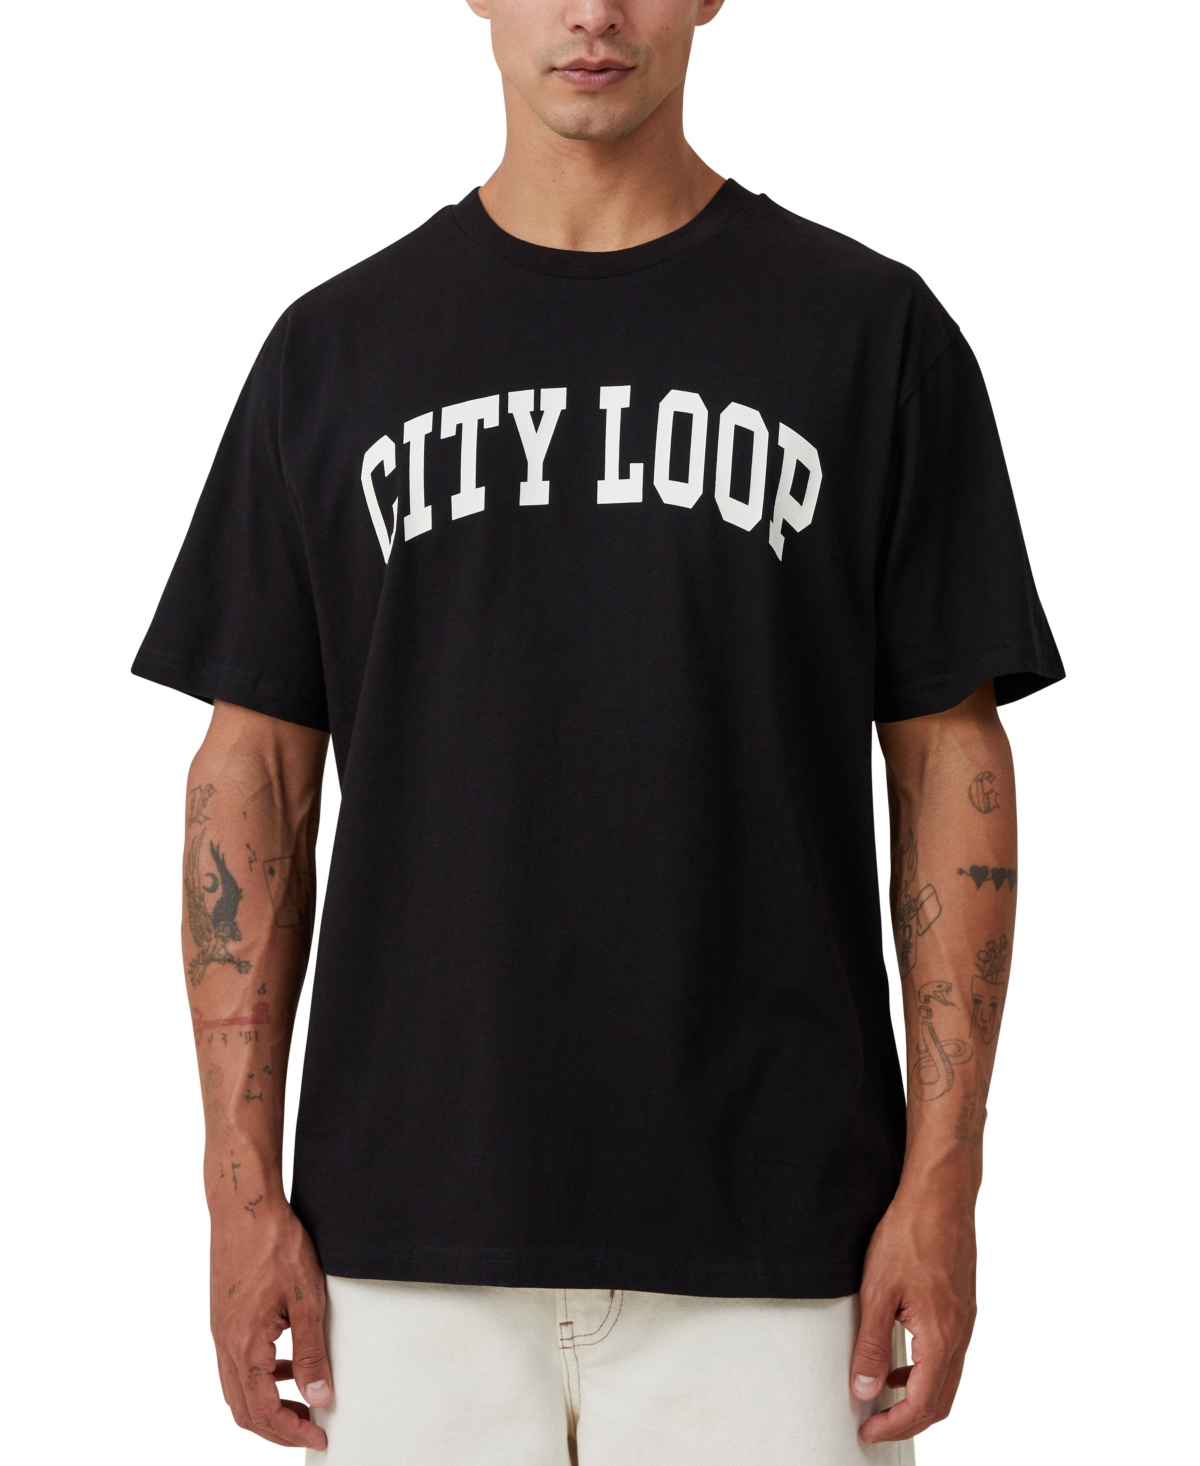 Men's Loose Fit College T-Shirt - Black